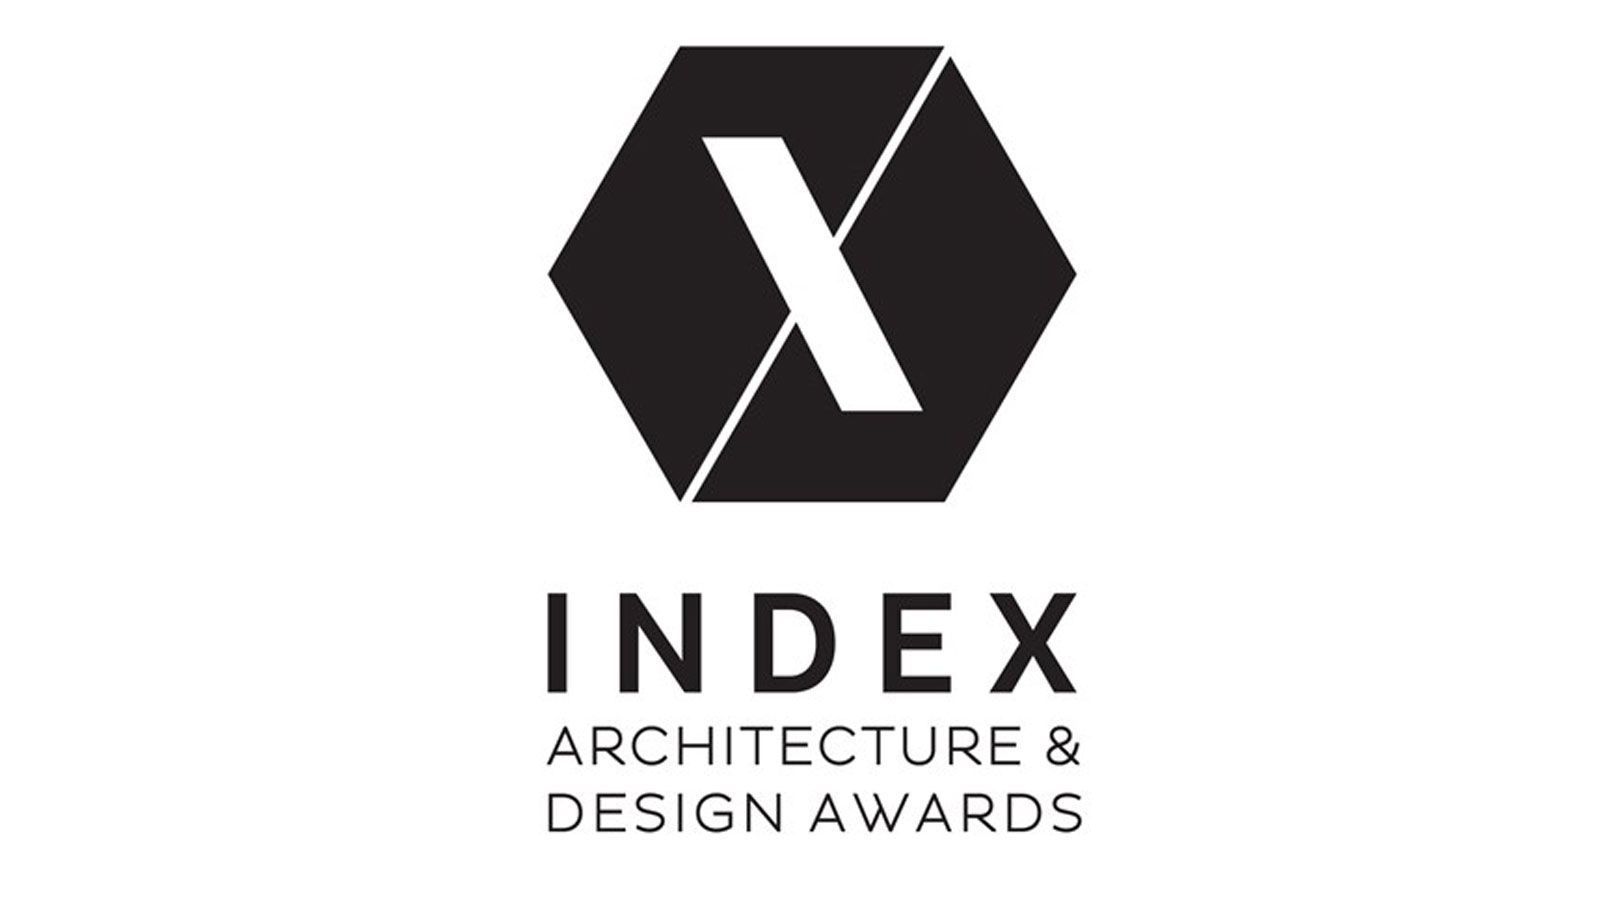 Index Architecture & Design Awards - HD Wallpaper 